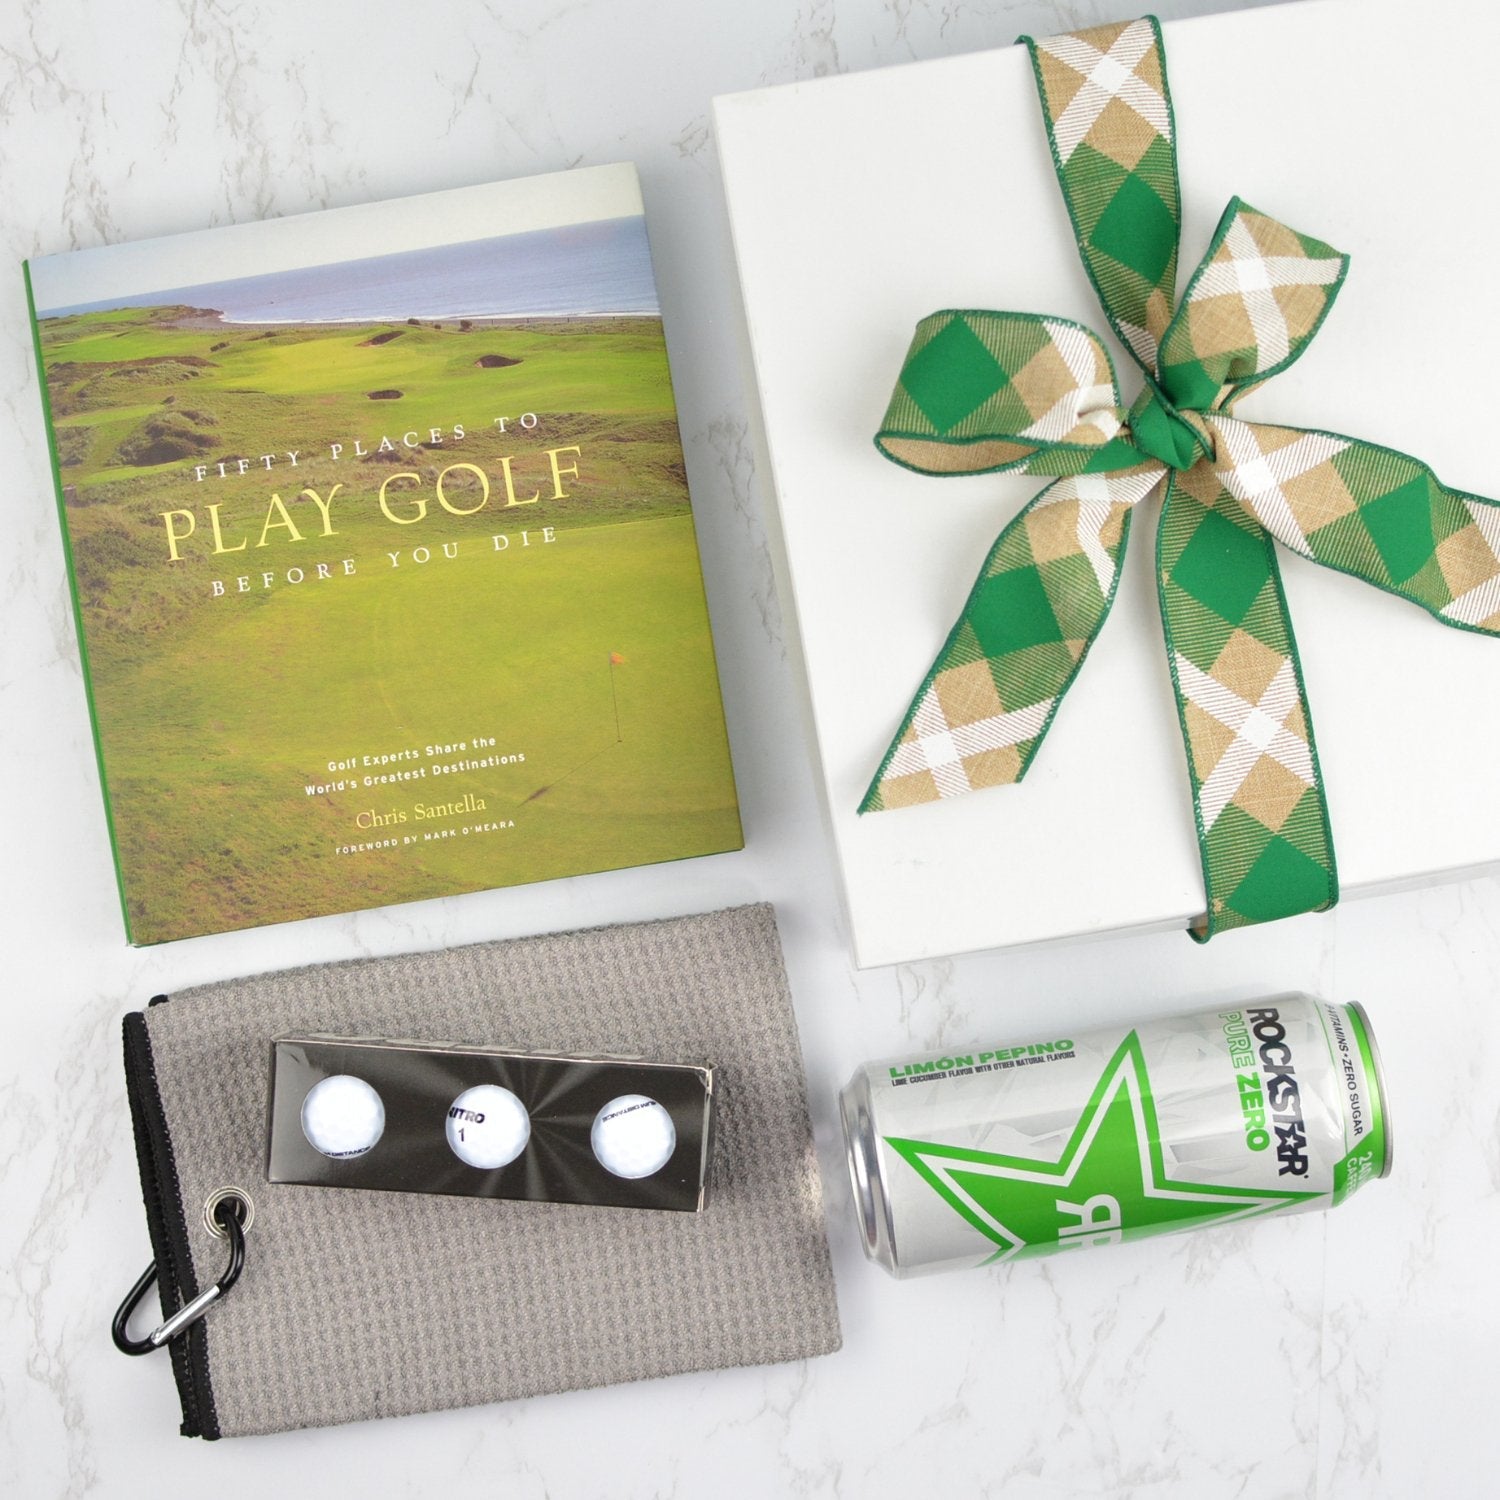 Play Golf - Jocelyn & Co. Drop Ship